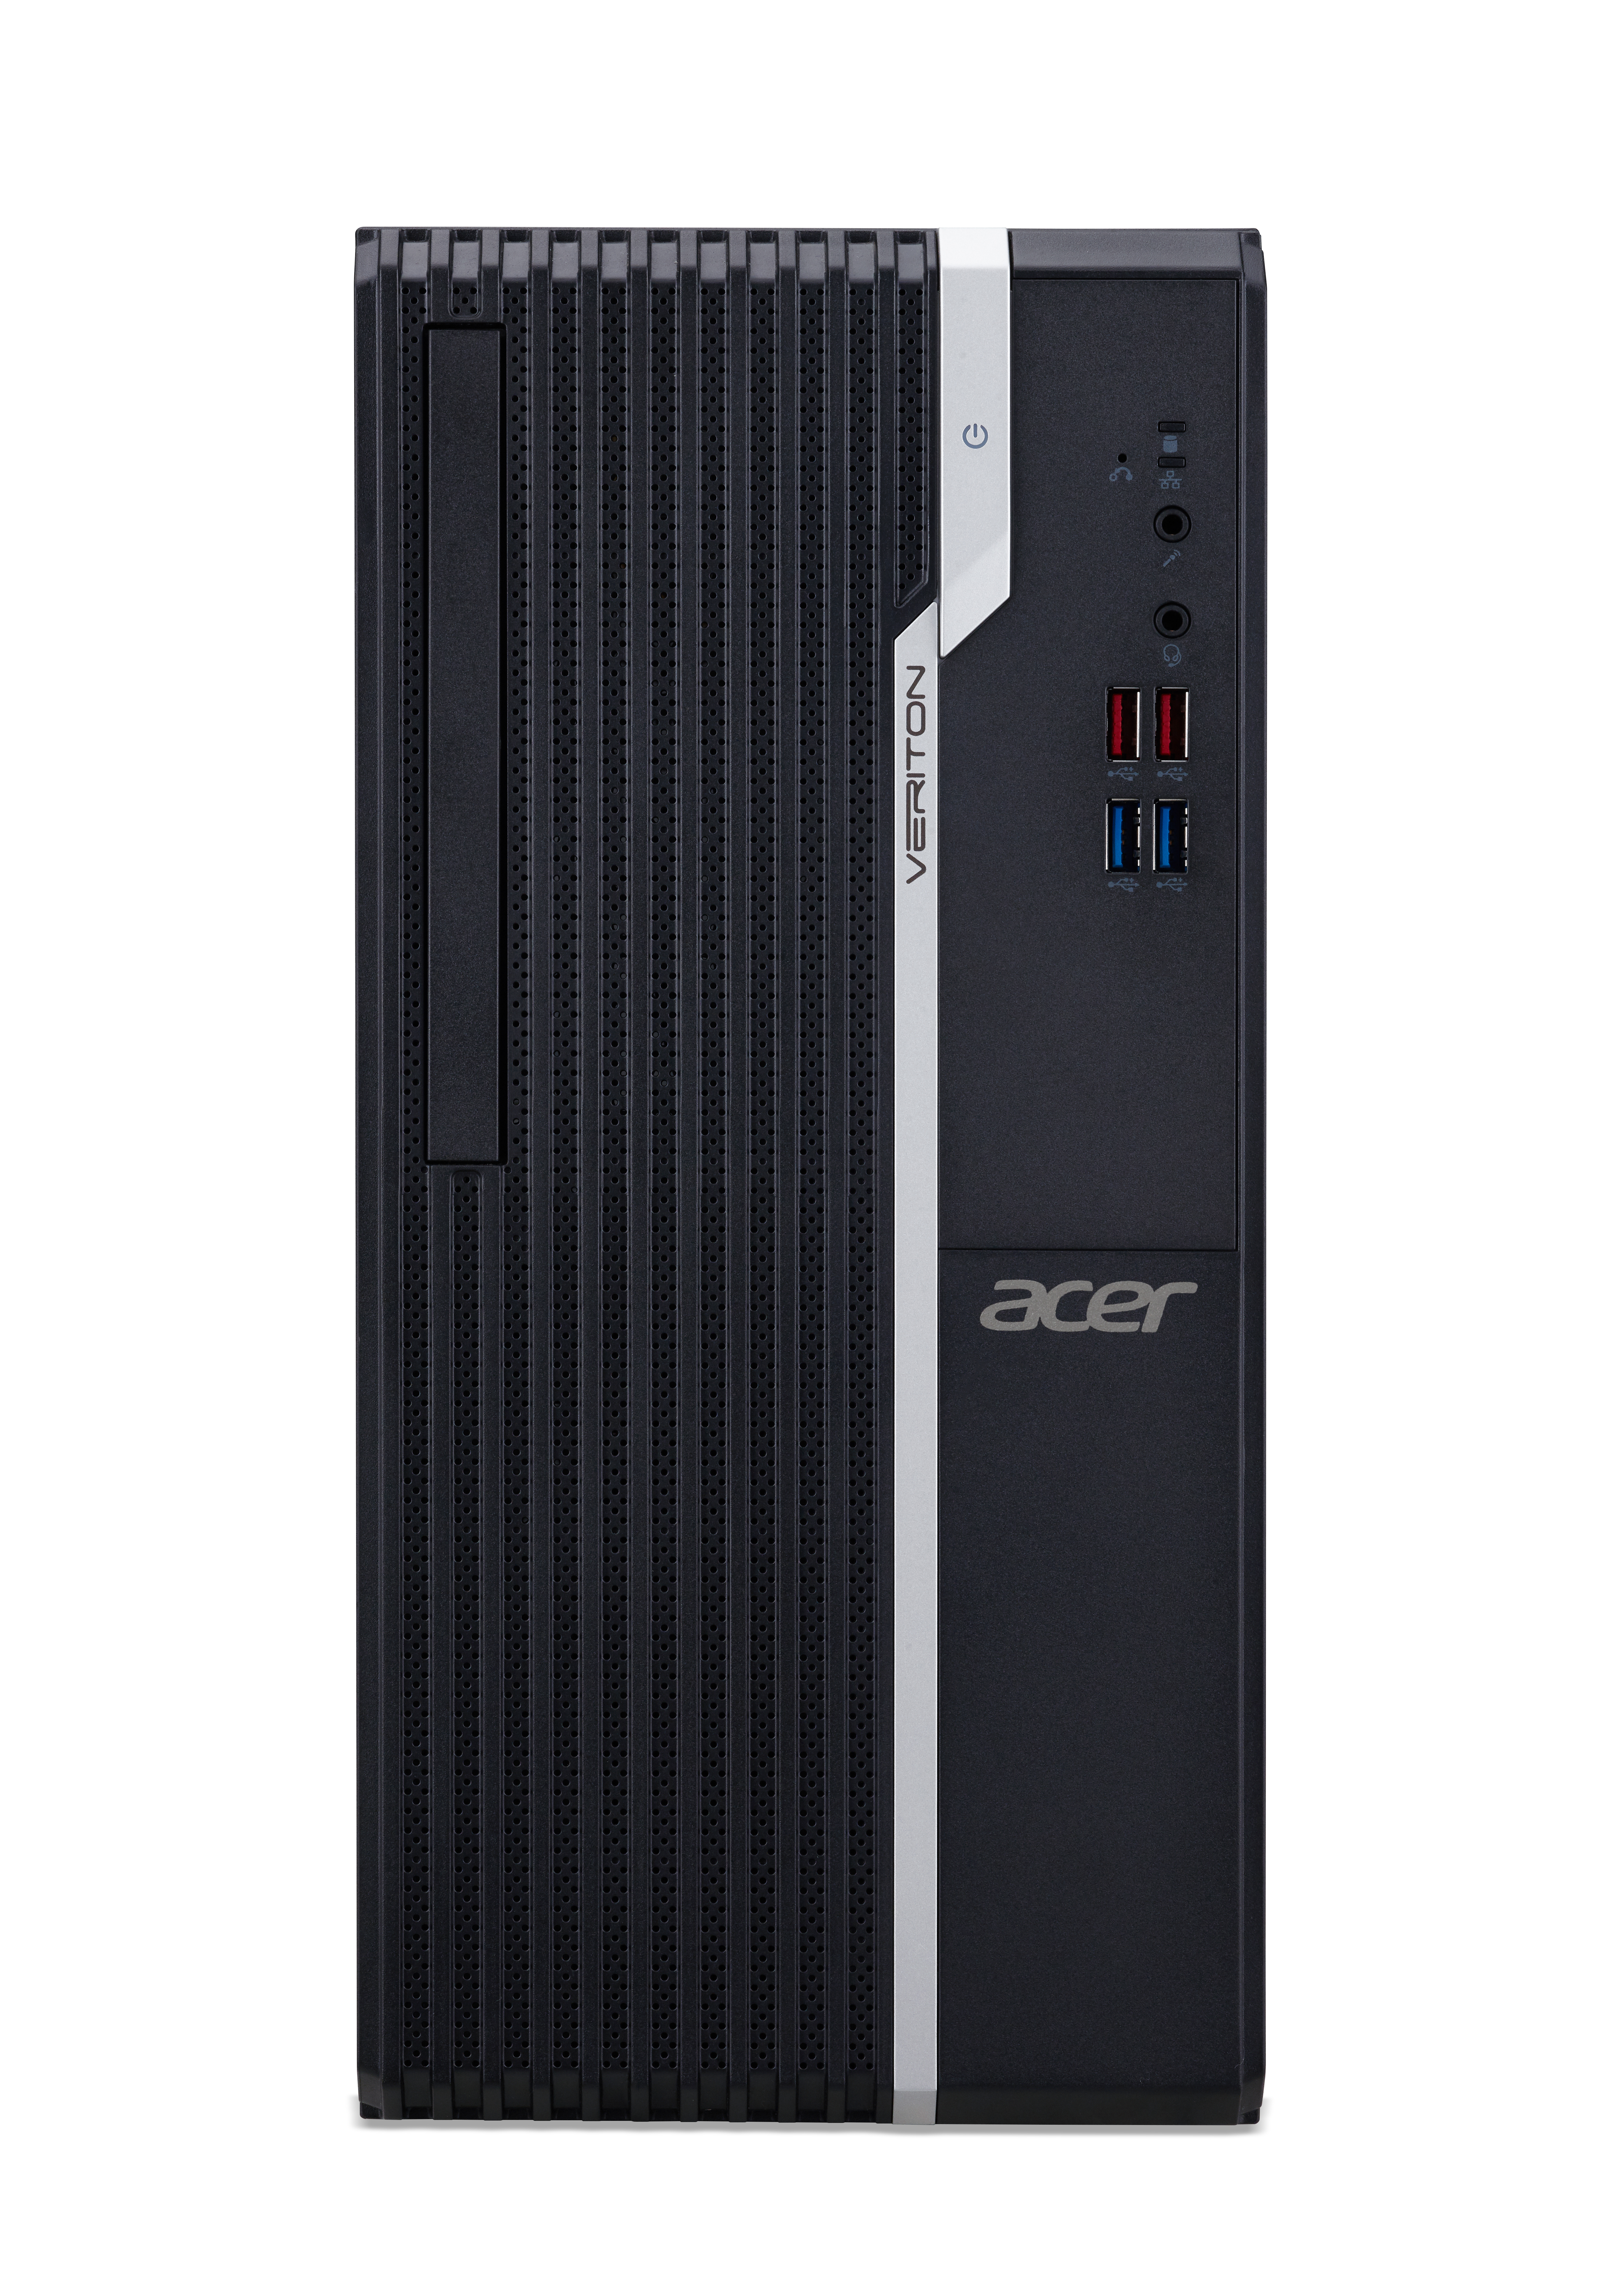 Acer Veriton S2680G DDR4-SDRAM i3-10105 Desktop Intel Core? i3 8 GB 256 GB SSD Windows 10 Pro PC Nero